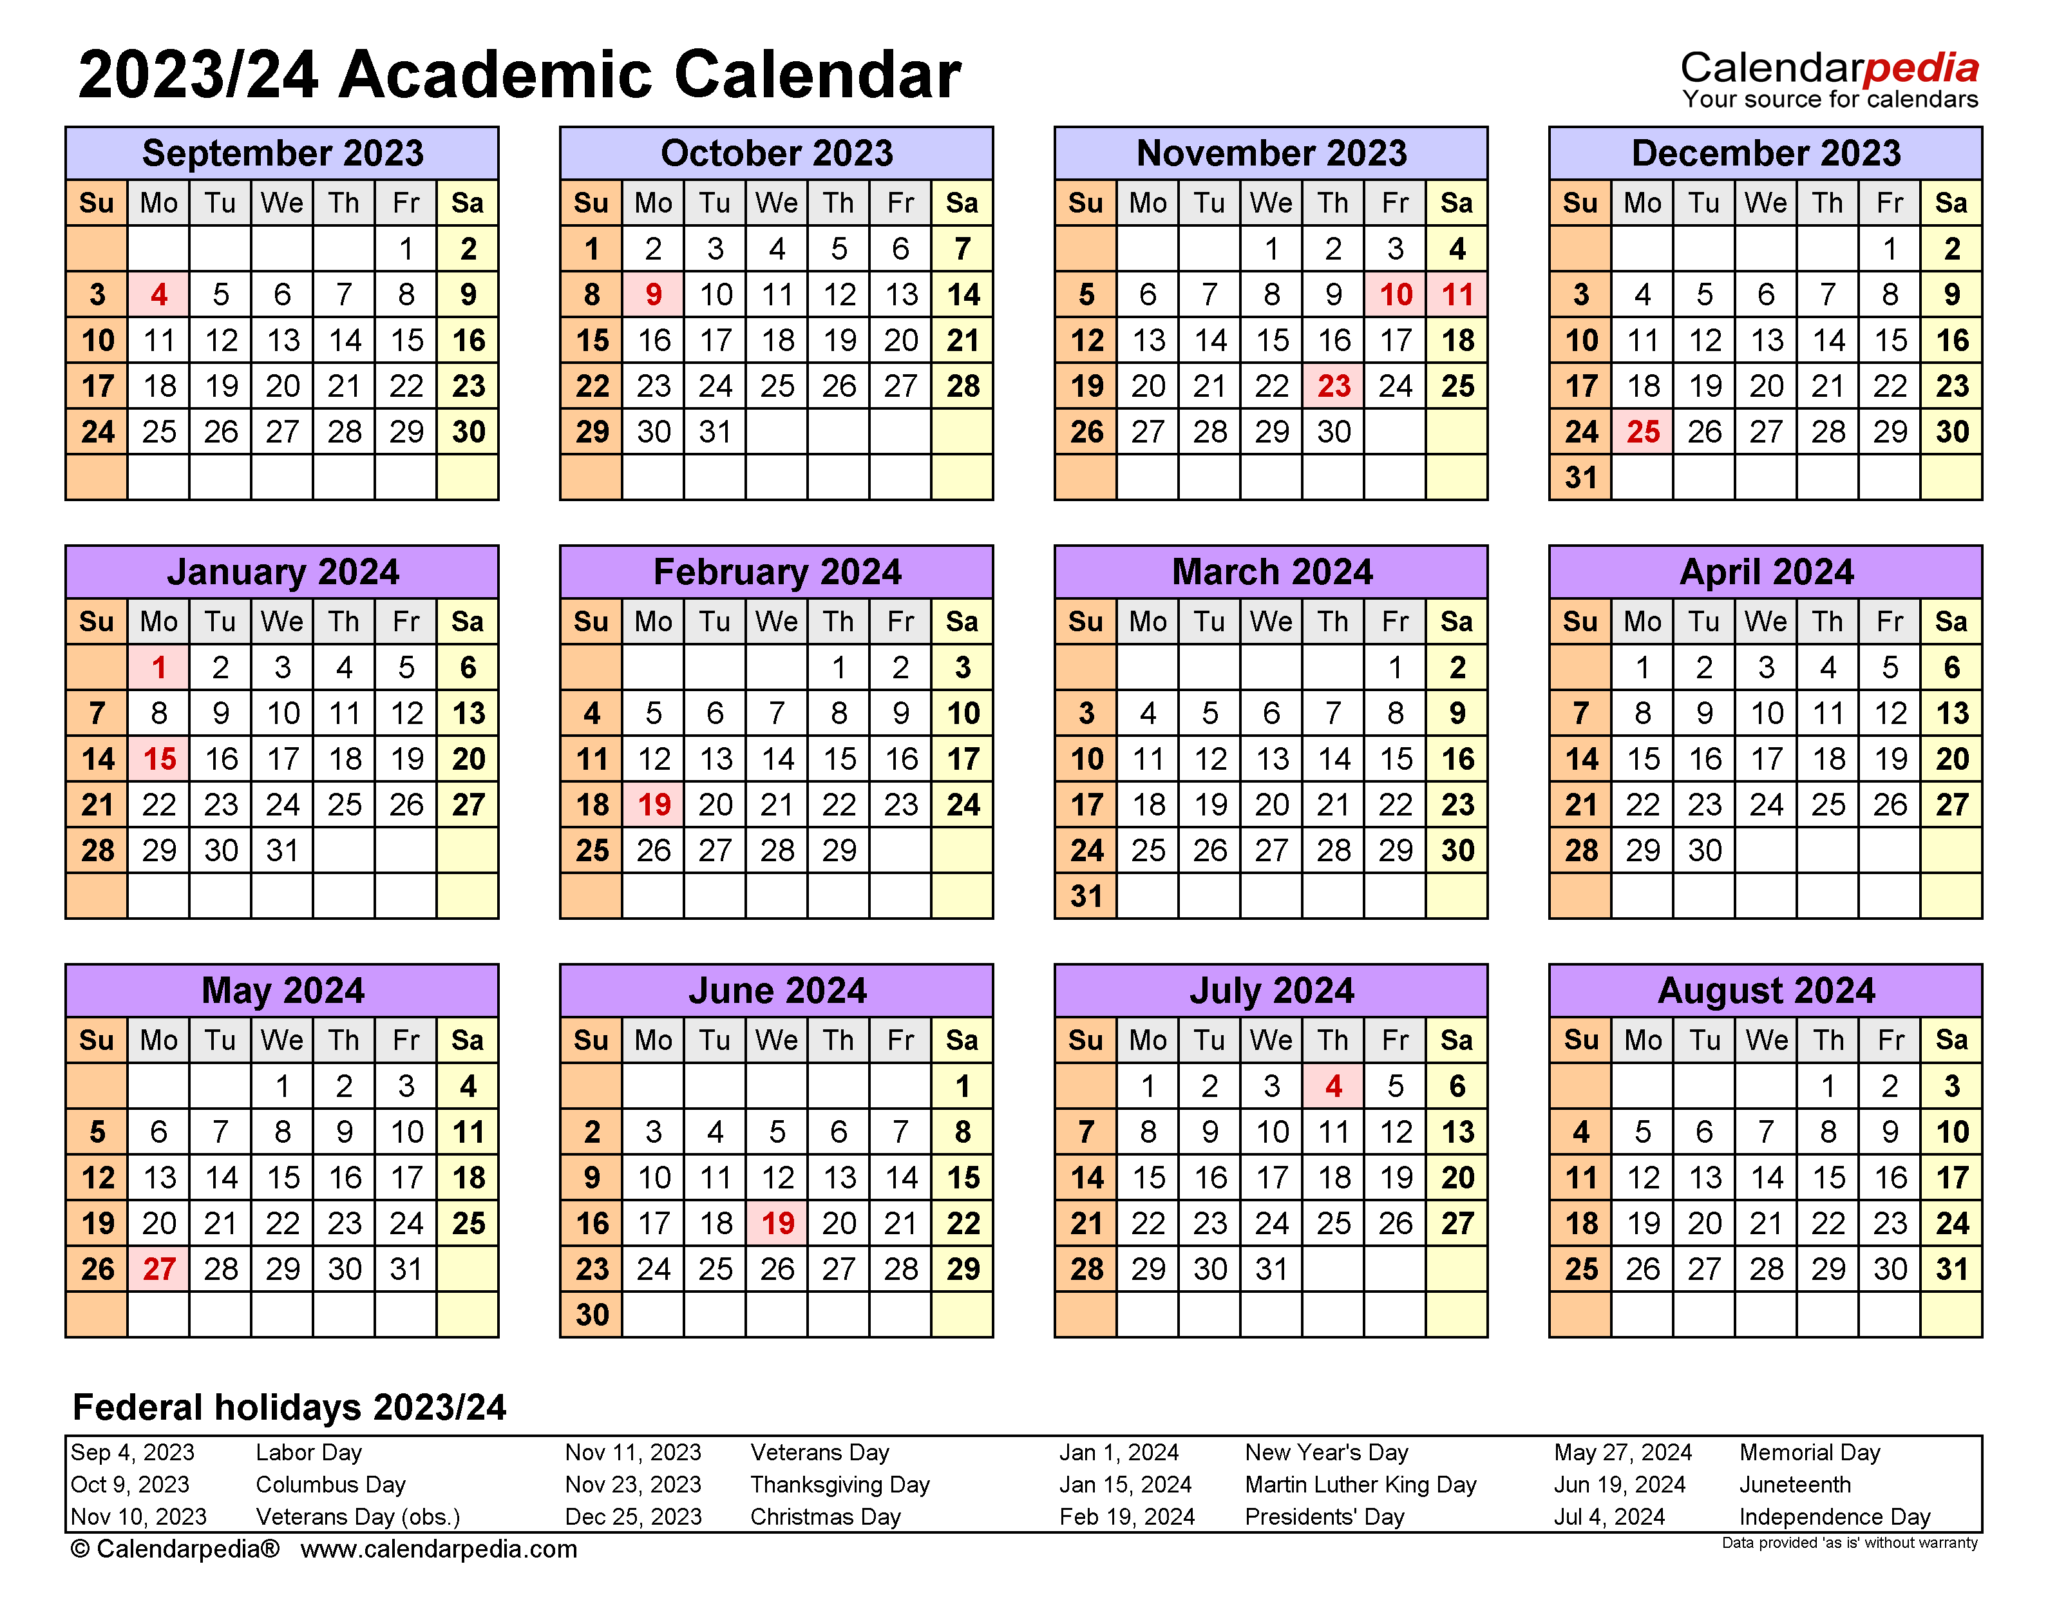 academic-calendar-cornell-2022-23-printable-calendar-2023